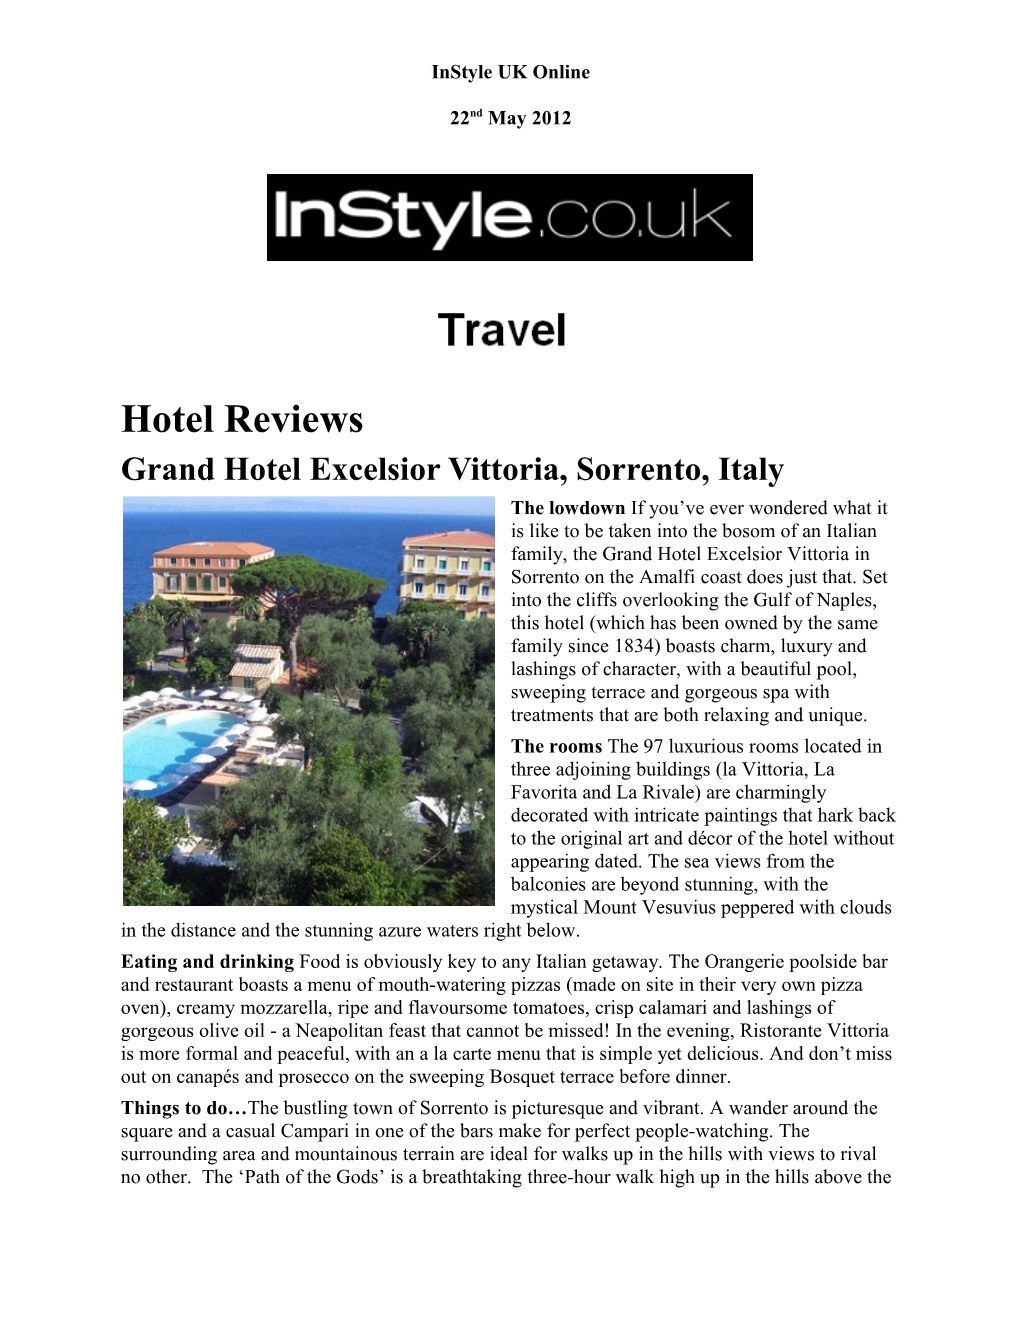 Grand Hotel Excelsior Vittoria, Sorrento, Italy